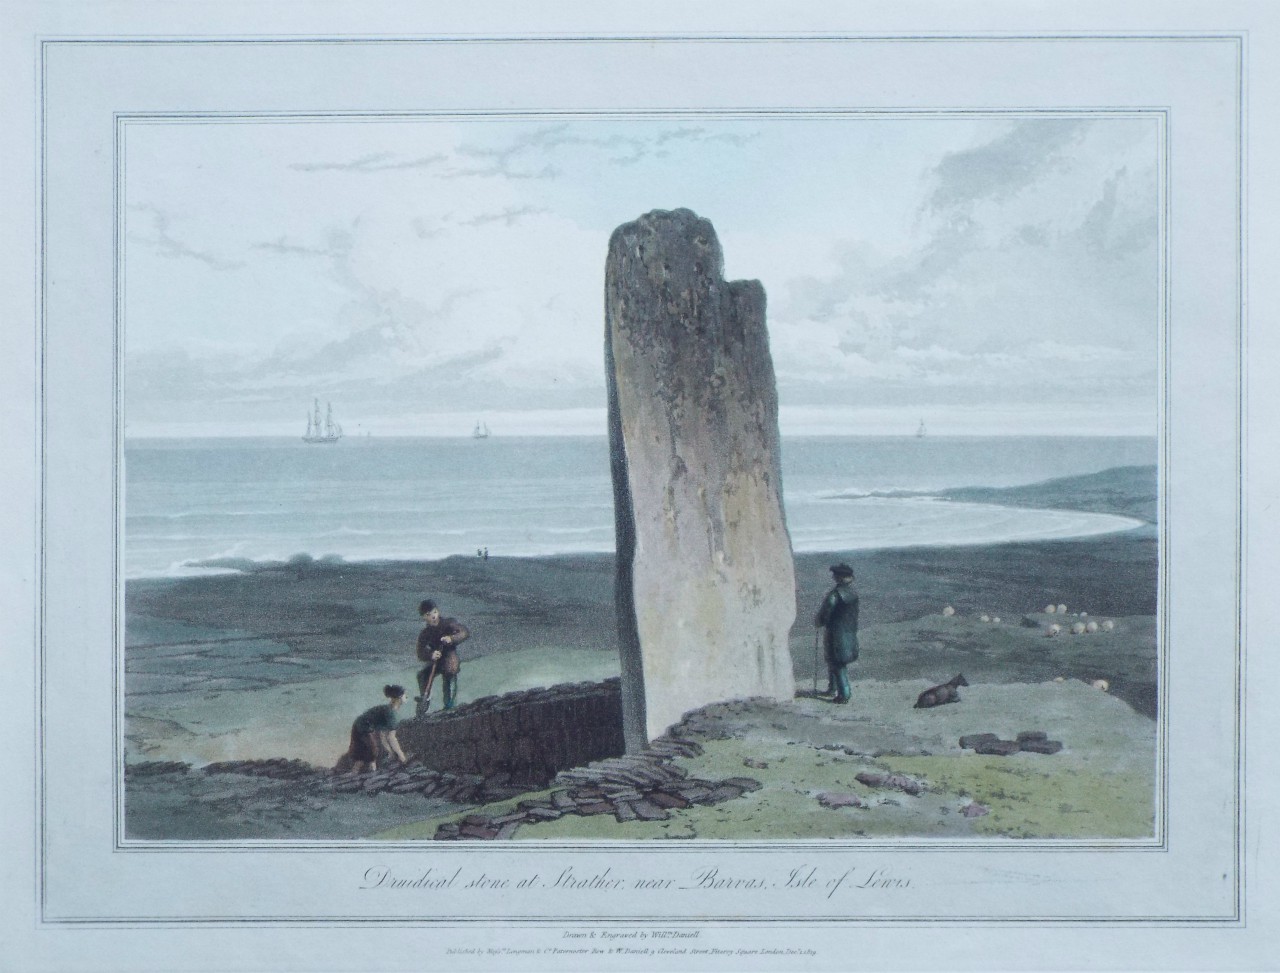 Aquatint - Druidical stone at Strather, near, Barras, Isle of Lewes. - Daniell